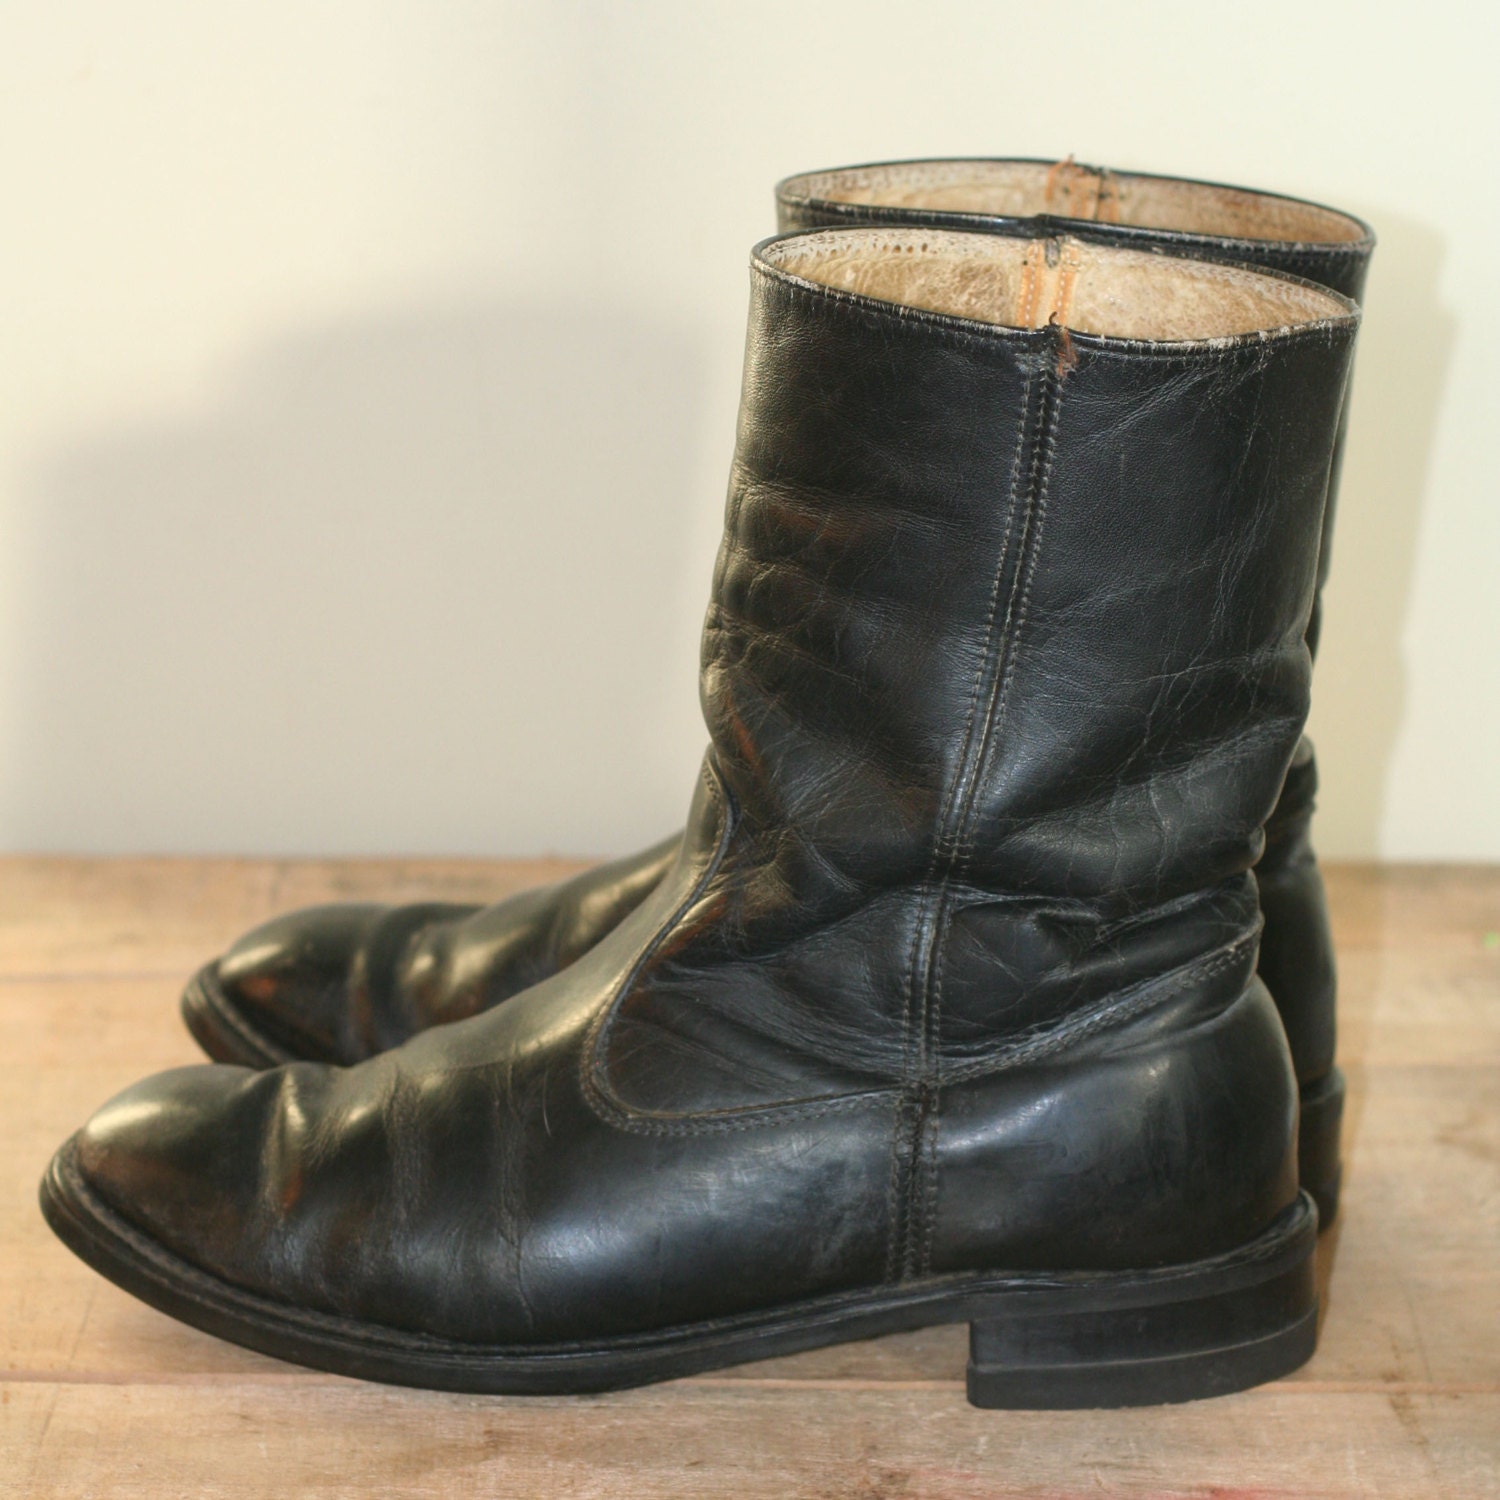 vintage men's black leather motorcycle boots size 8.5E